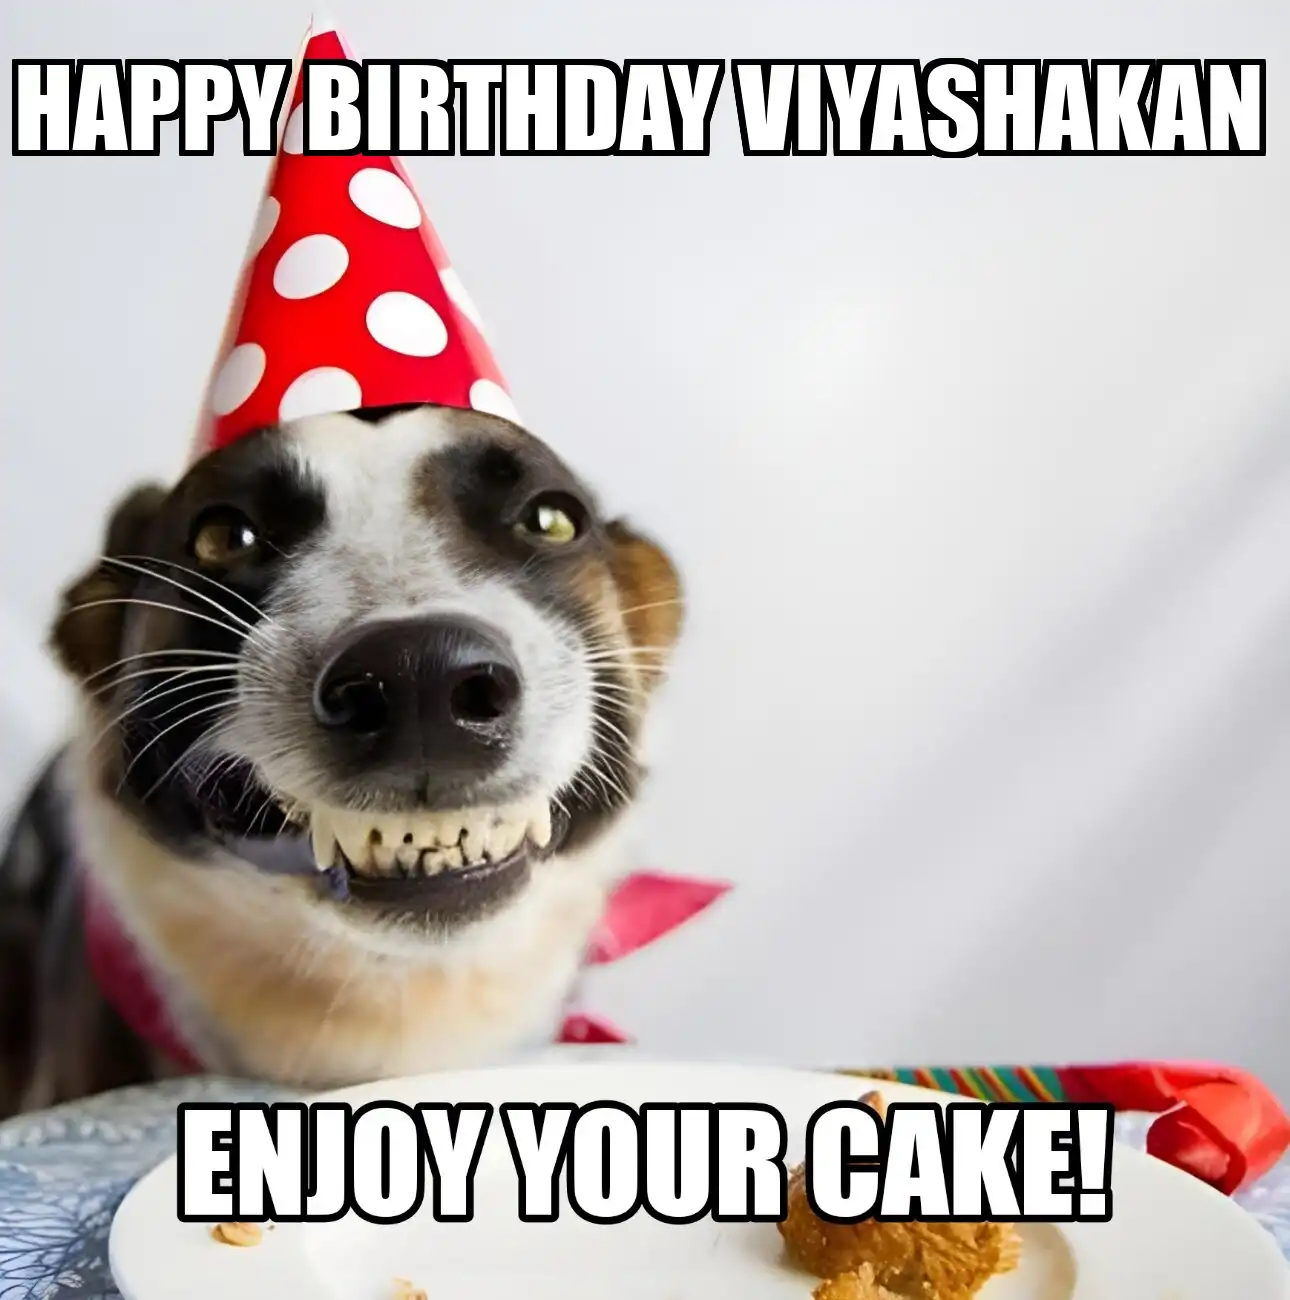 Happy Birthday Viyashakan Enjoy Your Cake Dog Meme